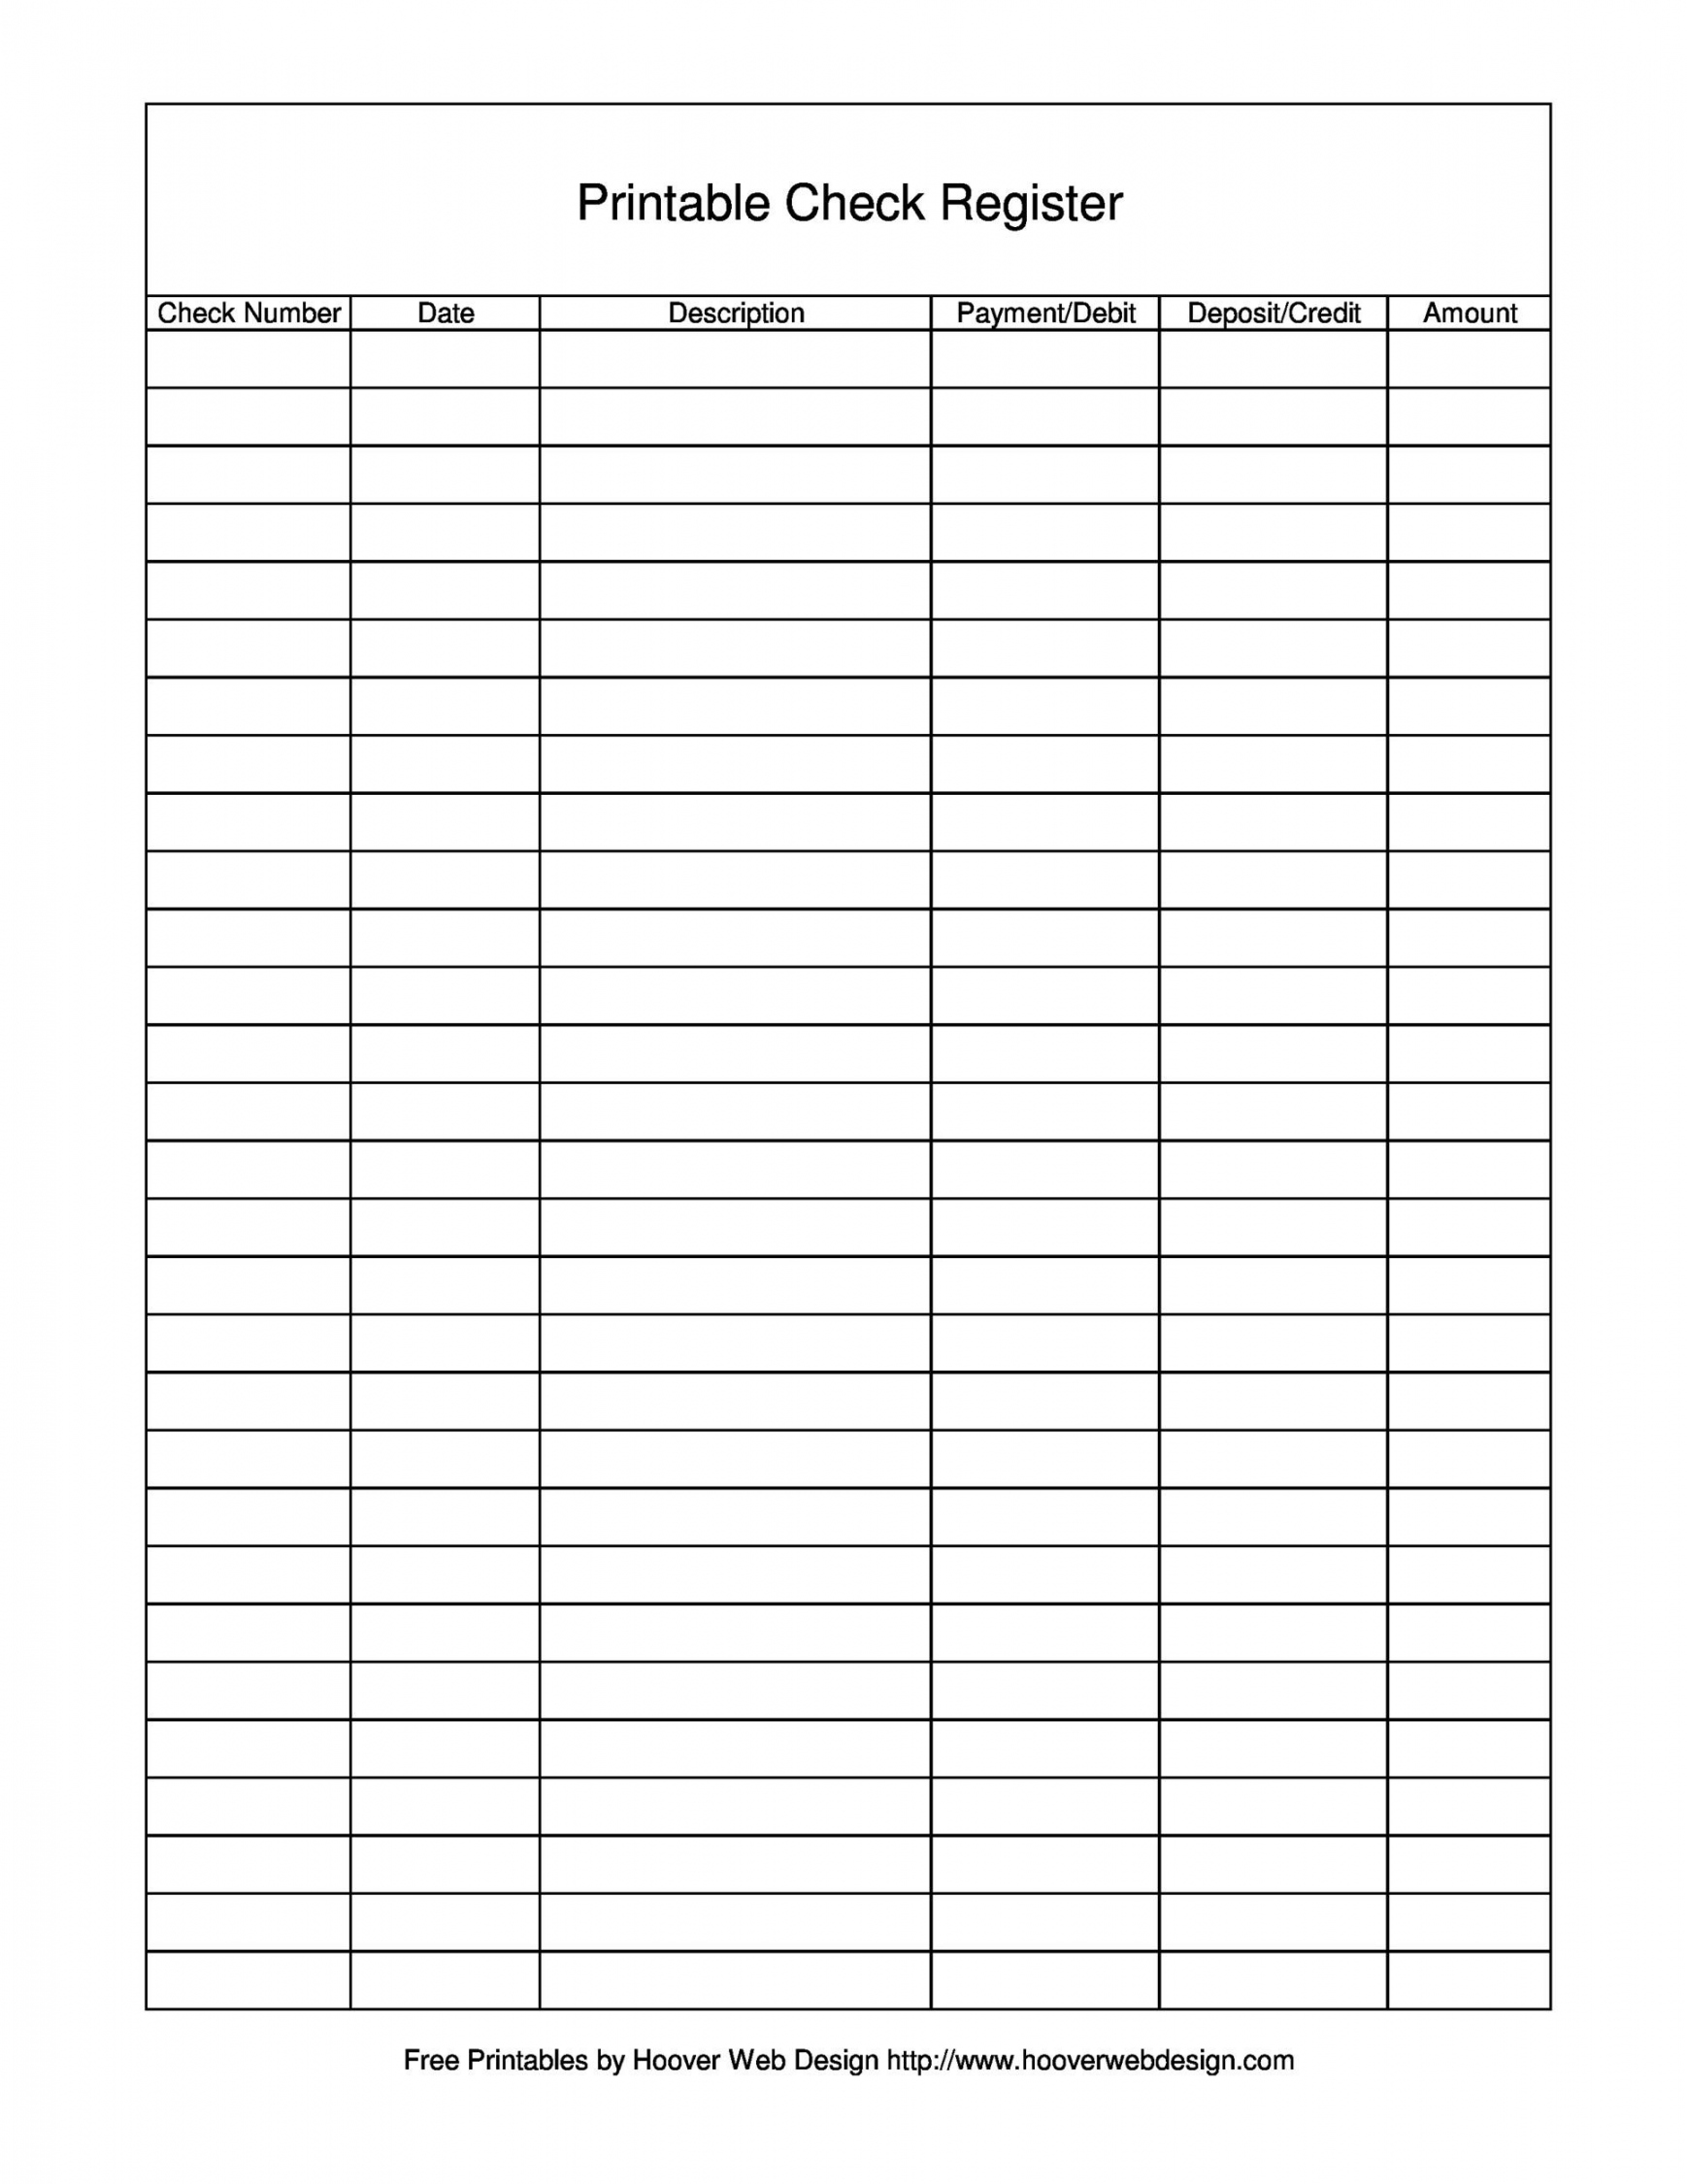 Checkbook Register Templates [% Free, Printable] ᐅ TemplateLab